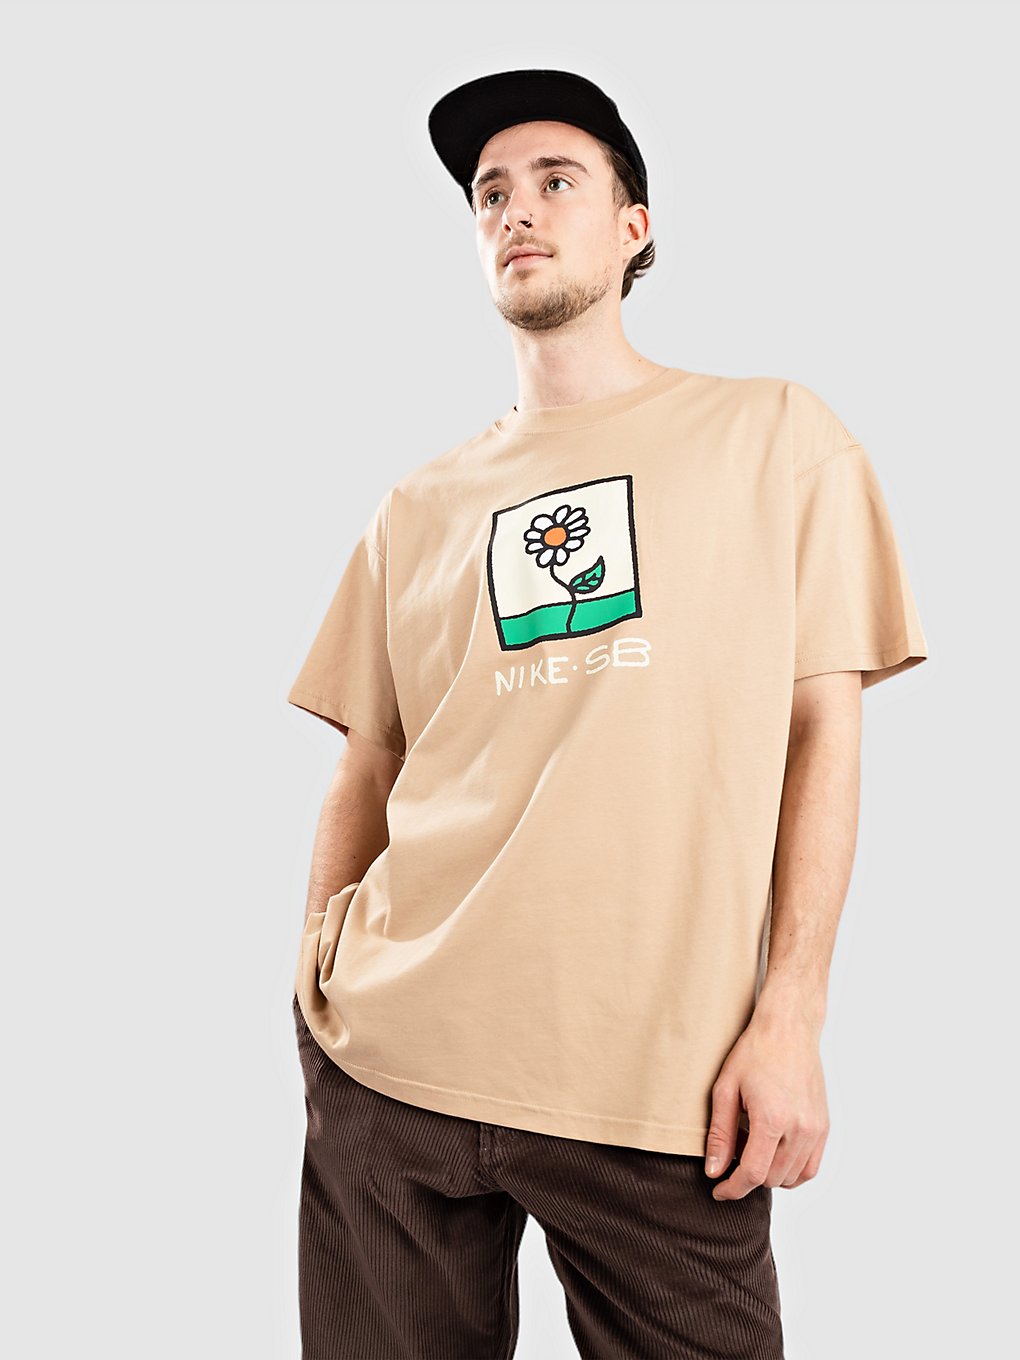 Nike SB Daisy T-Shirt hemp kaufen